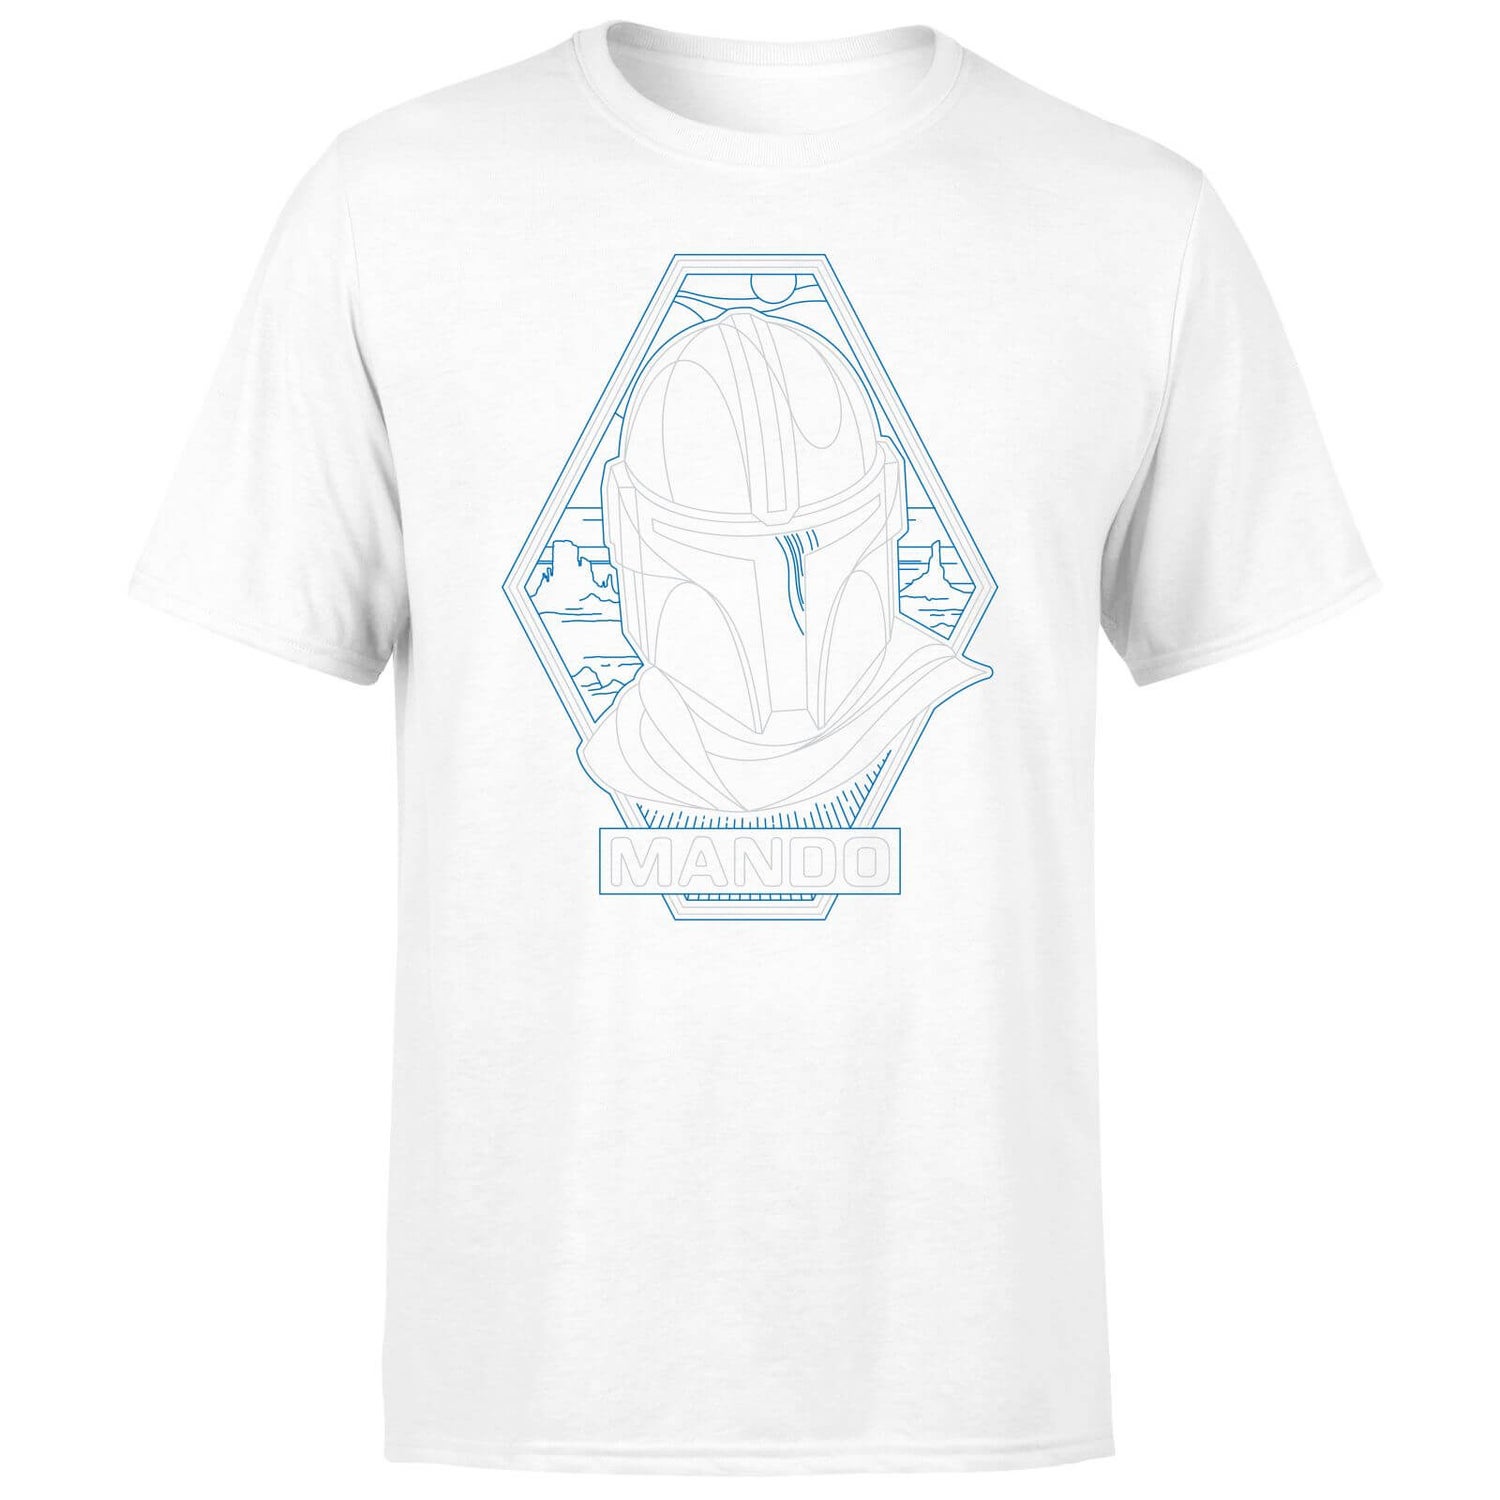 Star Wars The Mandalorian Mando Line Art Badge Men's T-Shirt - White